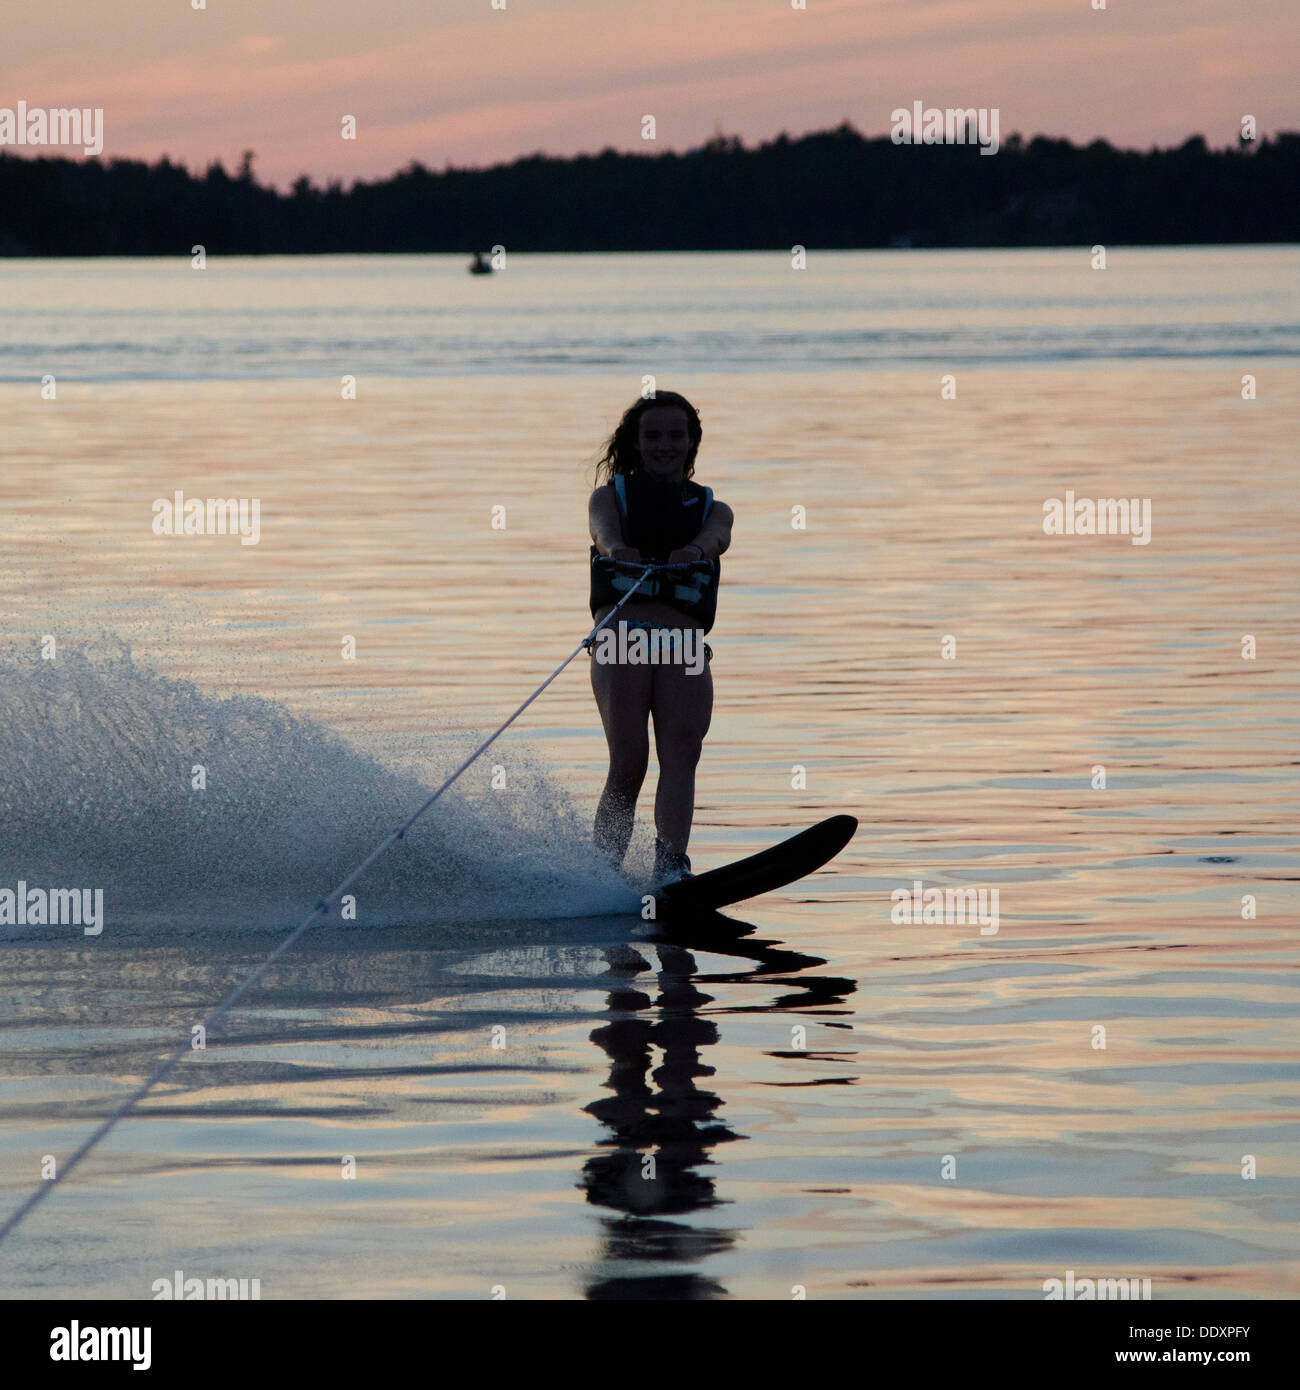 Girl water skiing in a lake, Lake of The Woods, Keewatin, Ontario, Canada Stock Photo